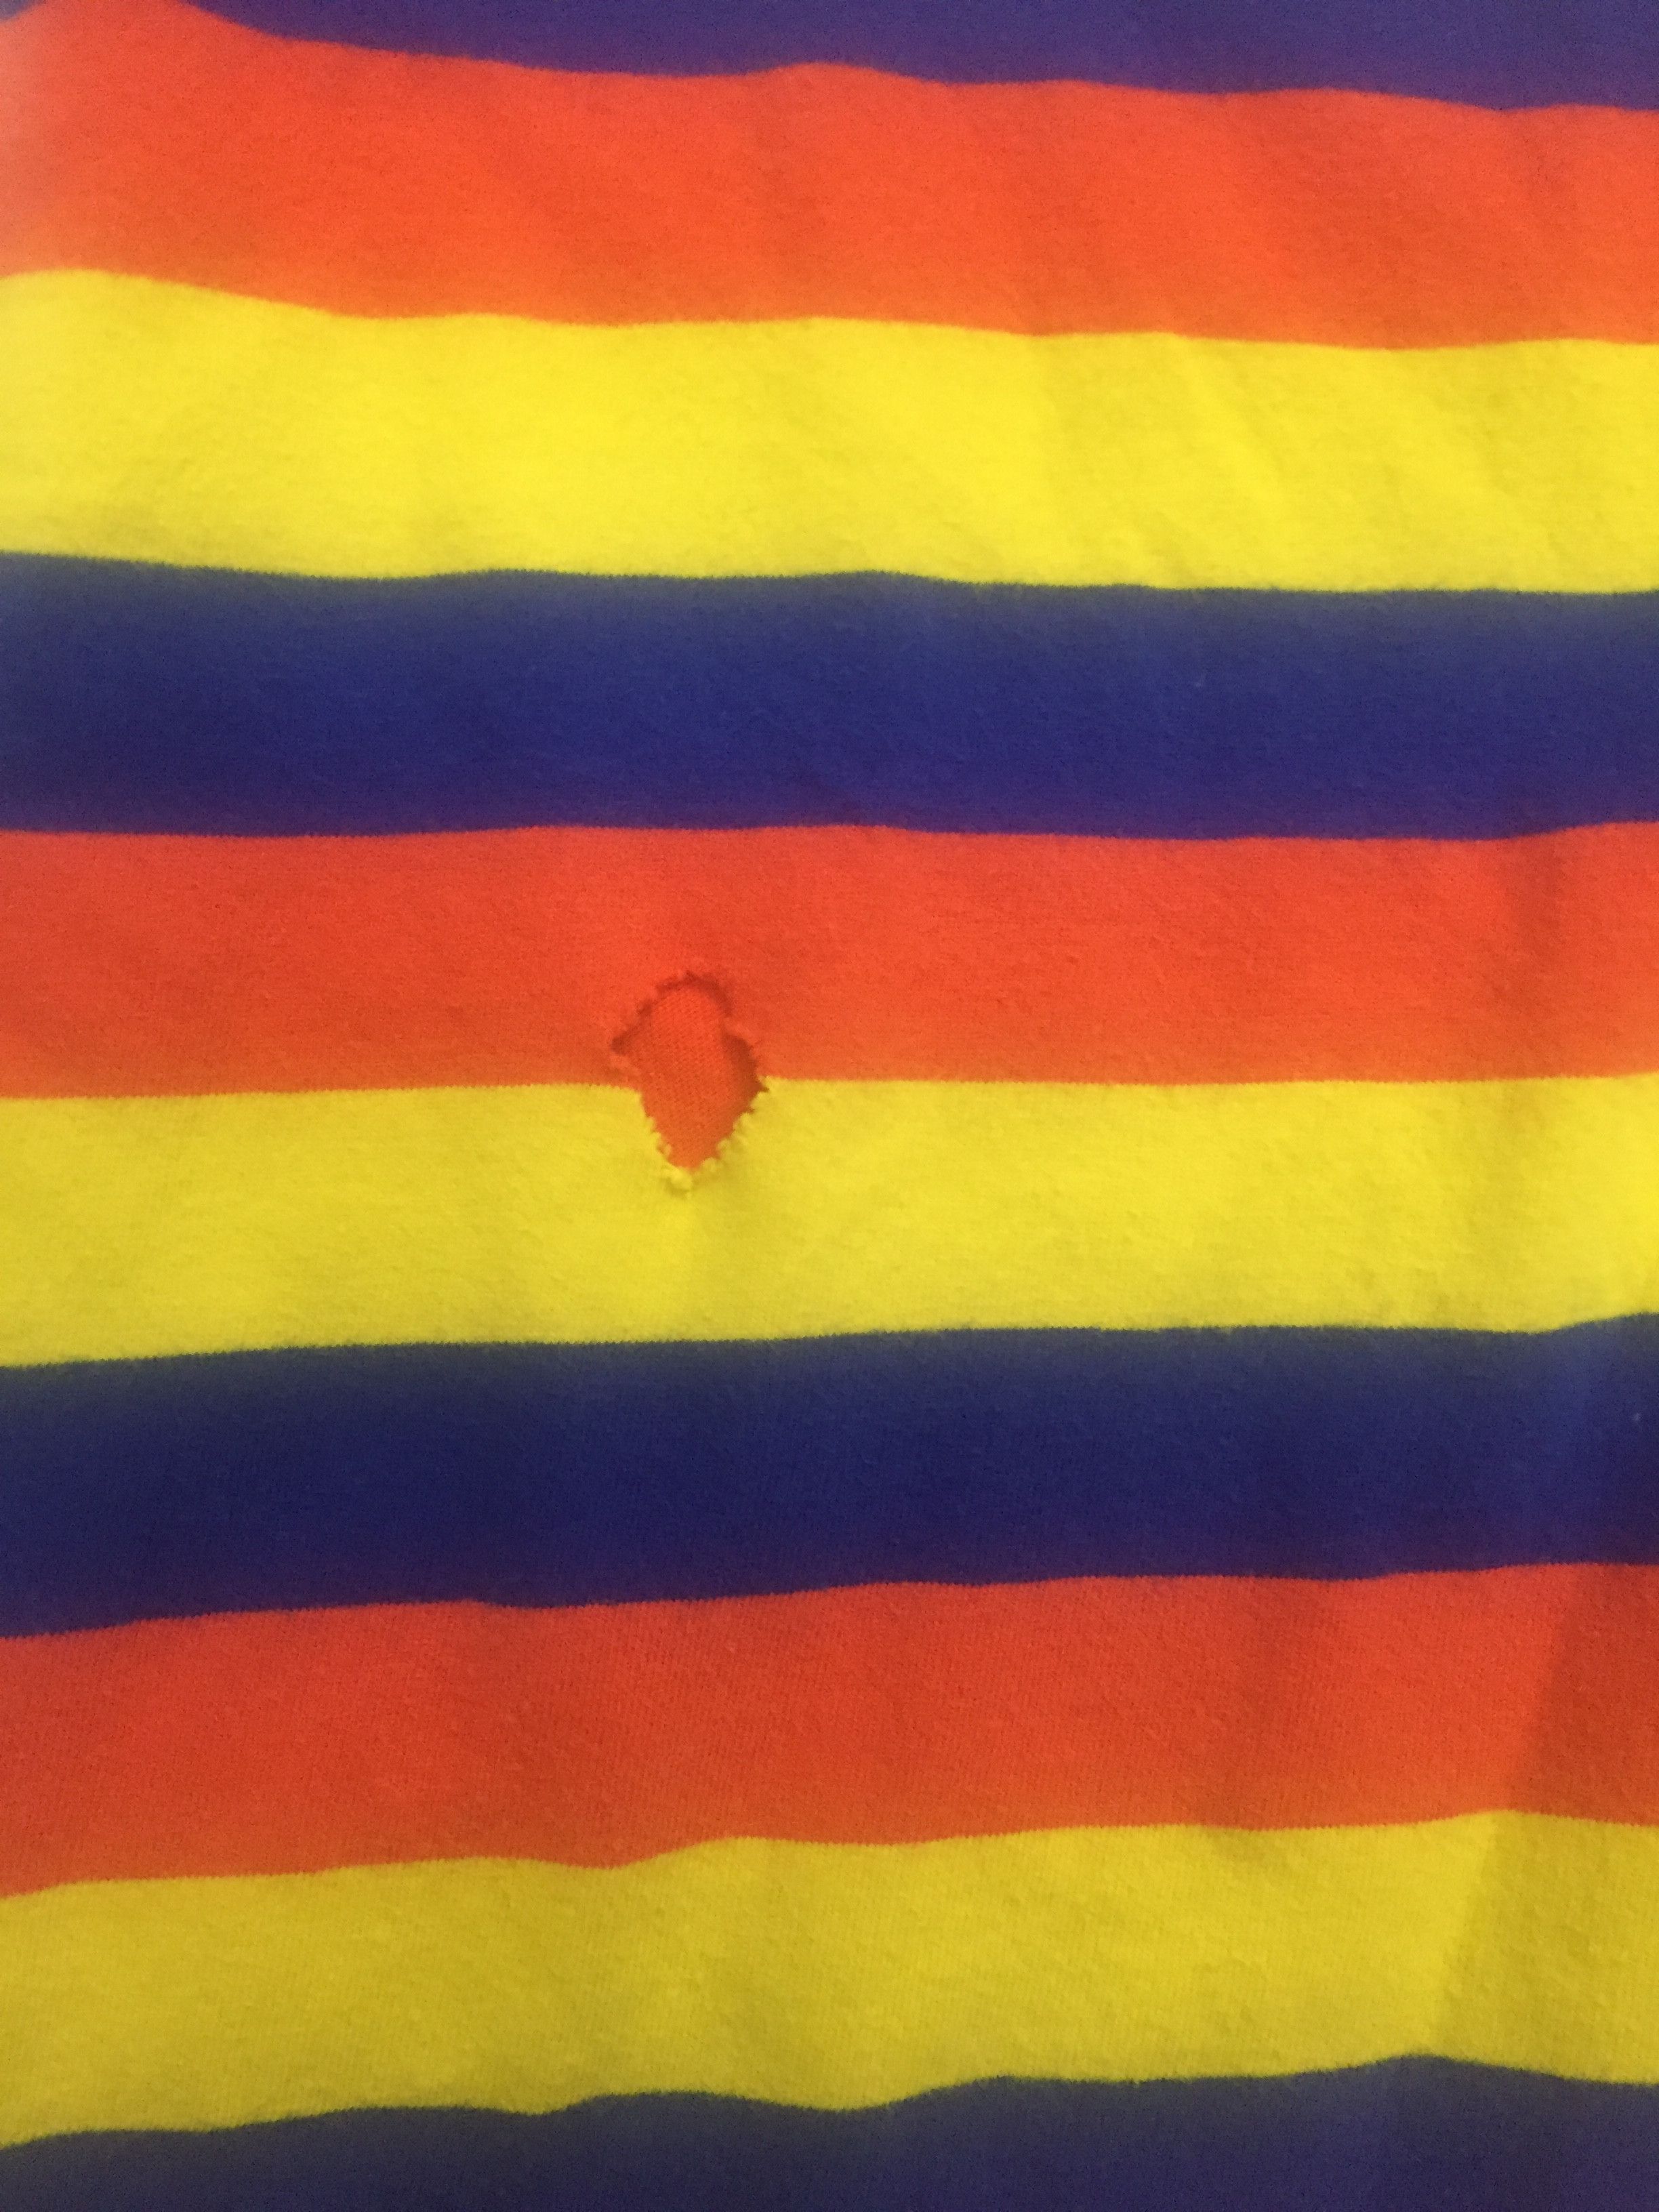 Golf Wang Golf Yellow/Red/Blue Striped Shirt Size US S / EU 44-46 / 1 - 2 Preview